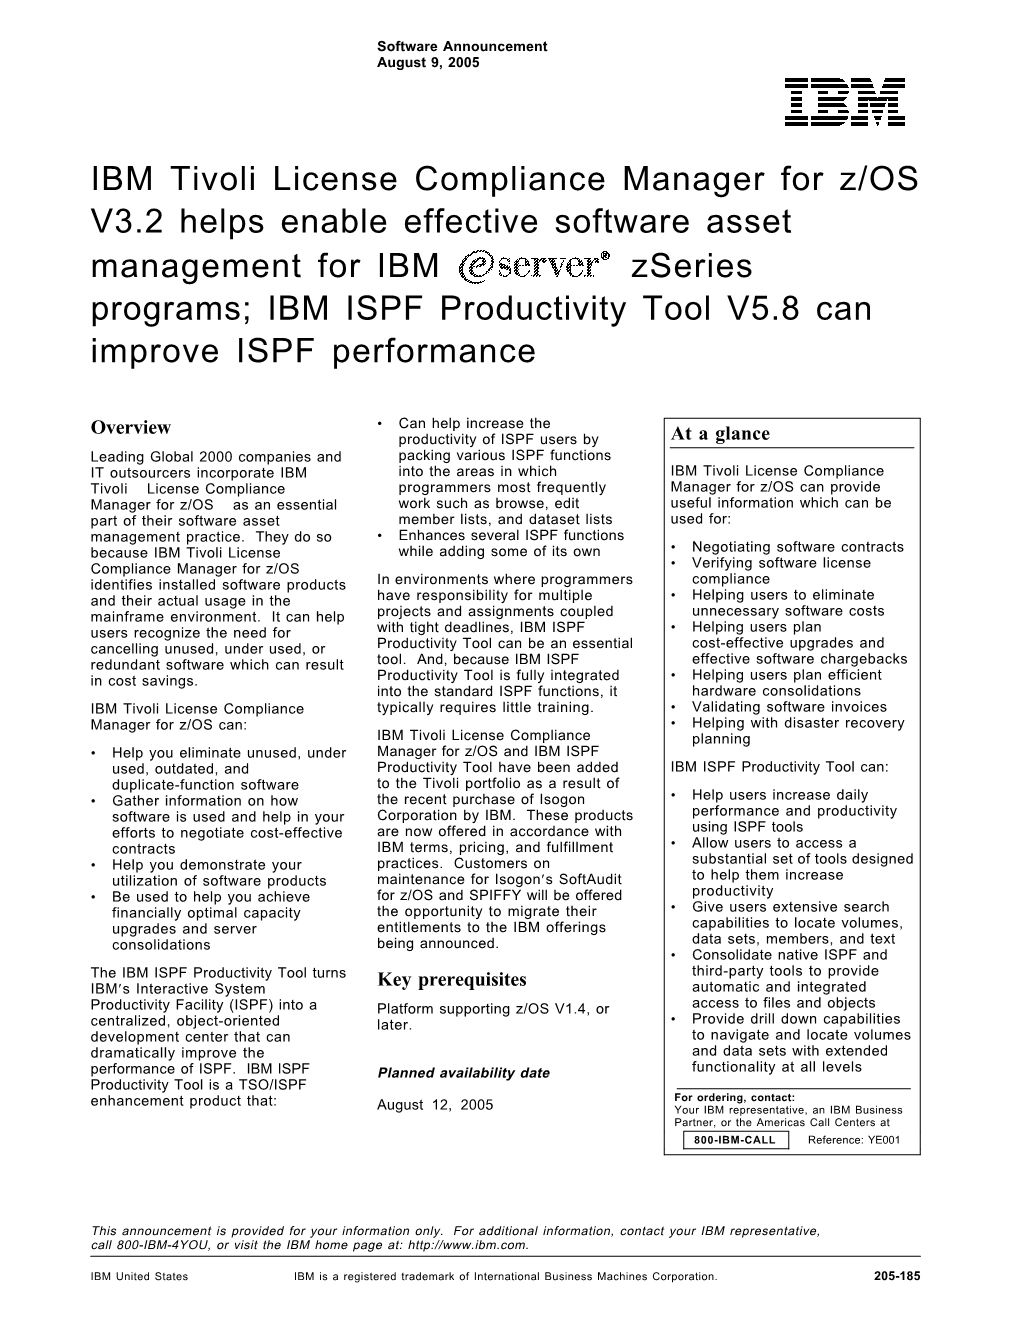 IBM Tivoli License Compliance Manager for Z/OS V3.2 Helps